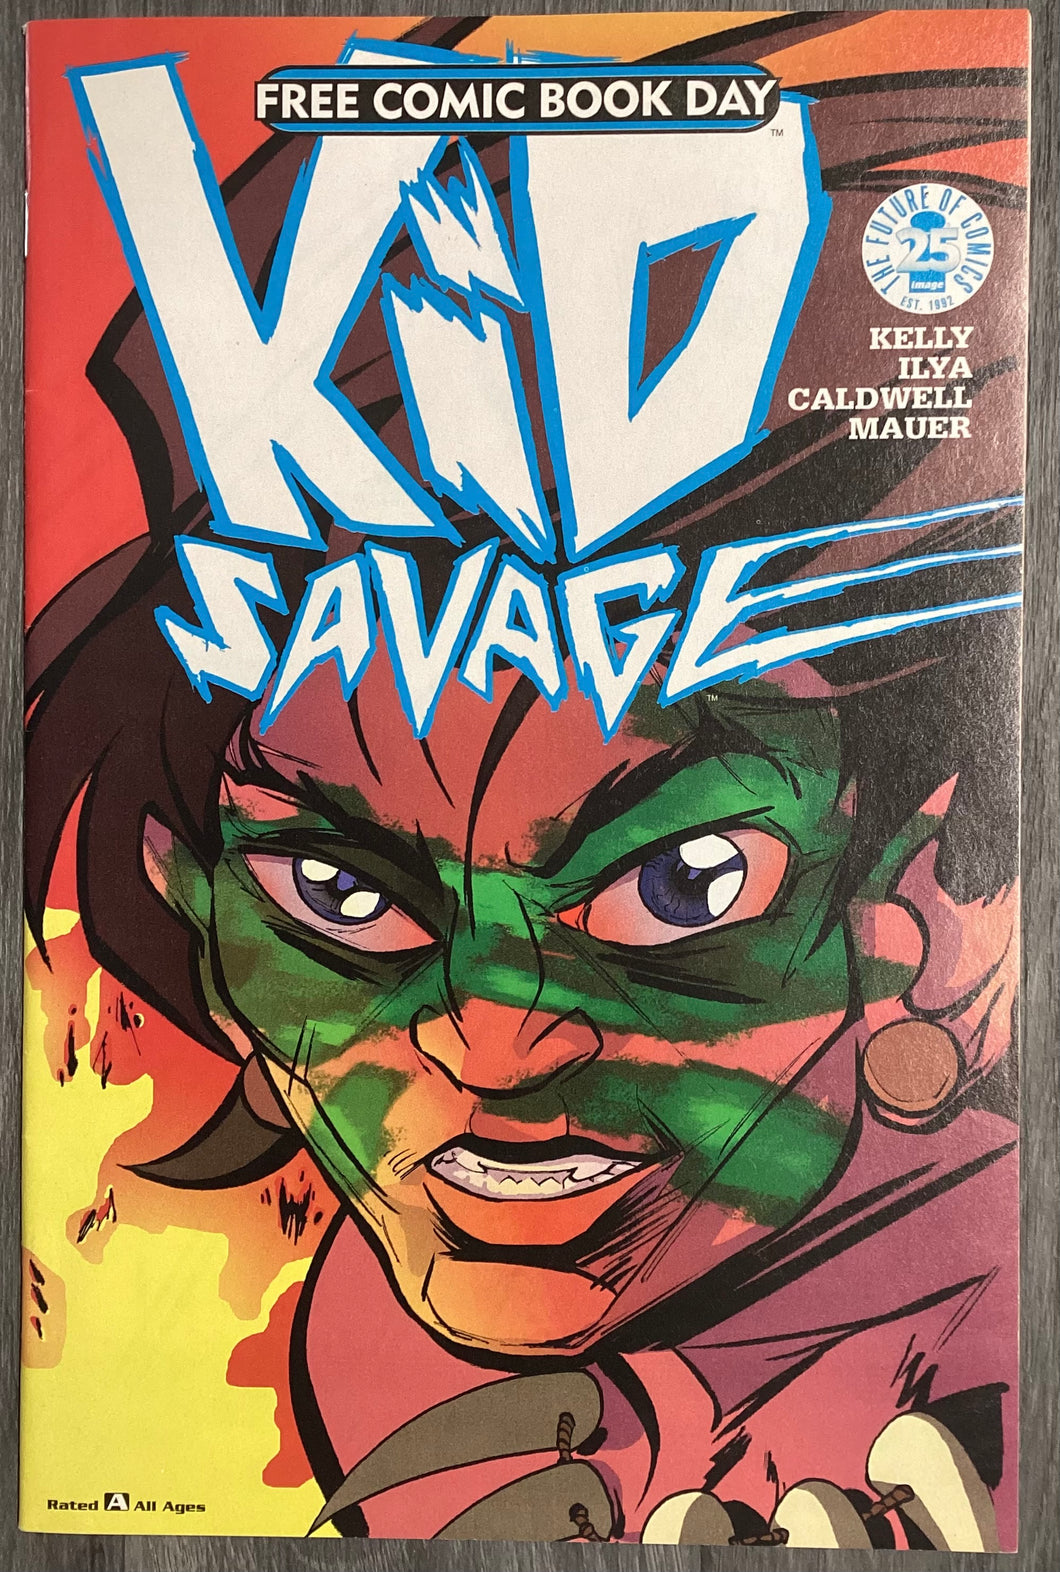 Kid Savage FCBD 2017 Image Comics